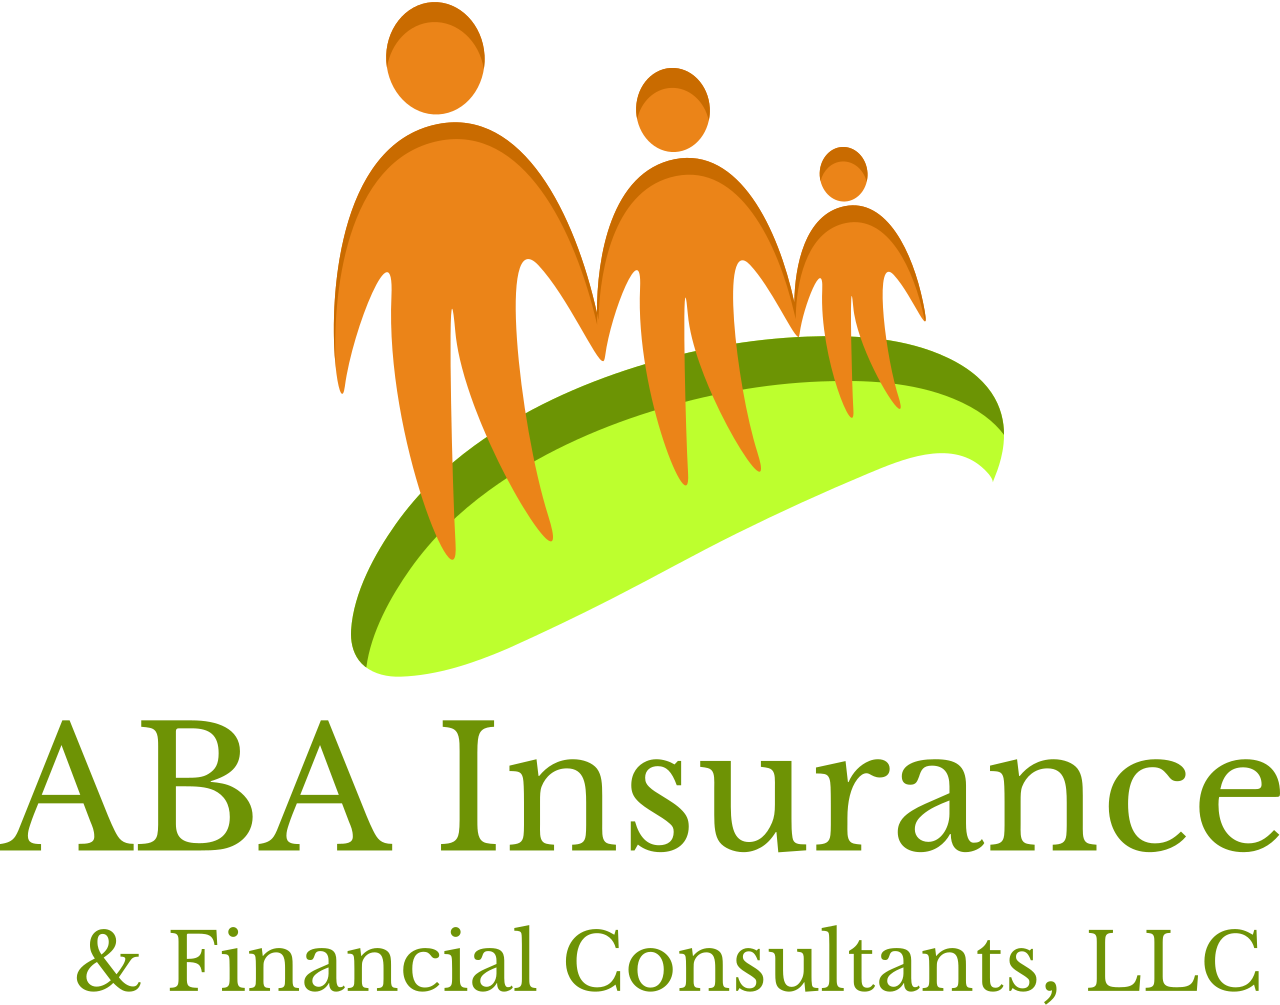 ABA Insurance 's logo